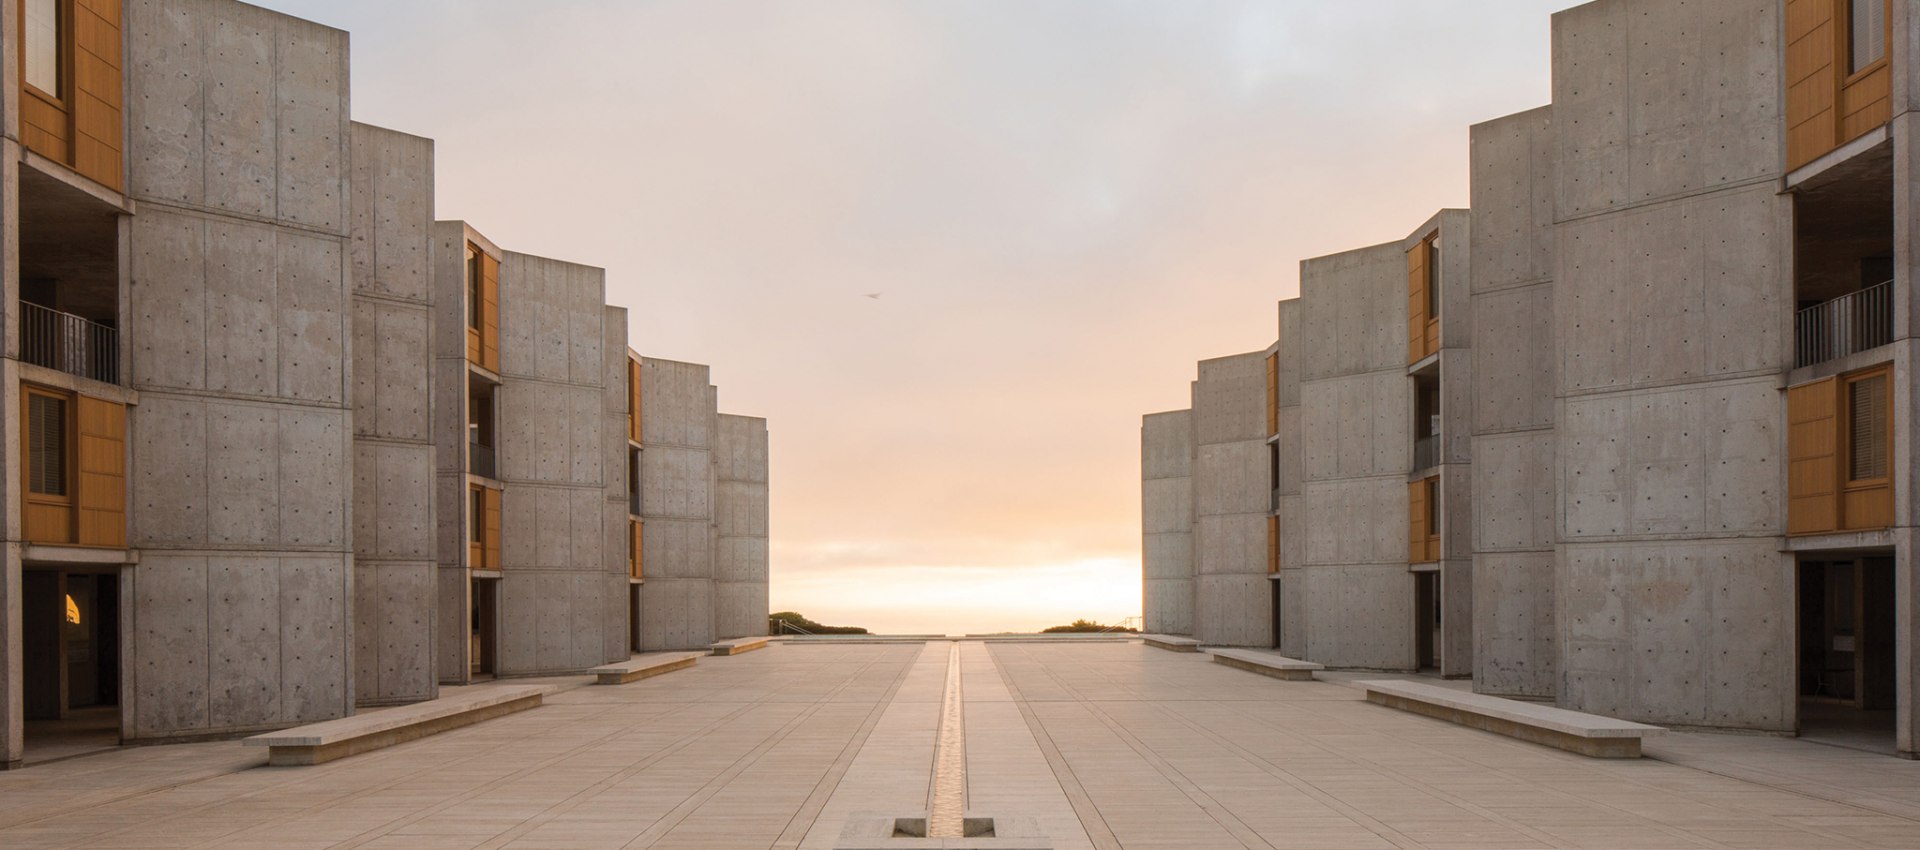 Salk Institute architect Louis Kahn: an amazing exhibit! – Cool San Diego  Sights!